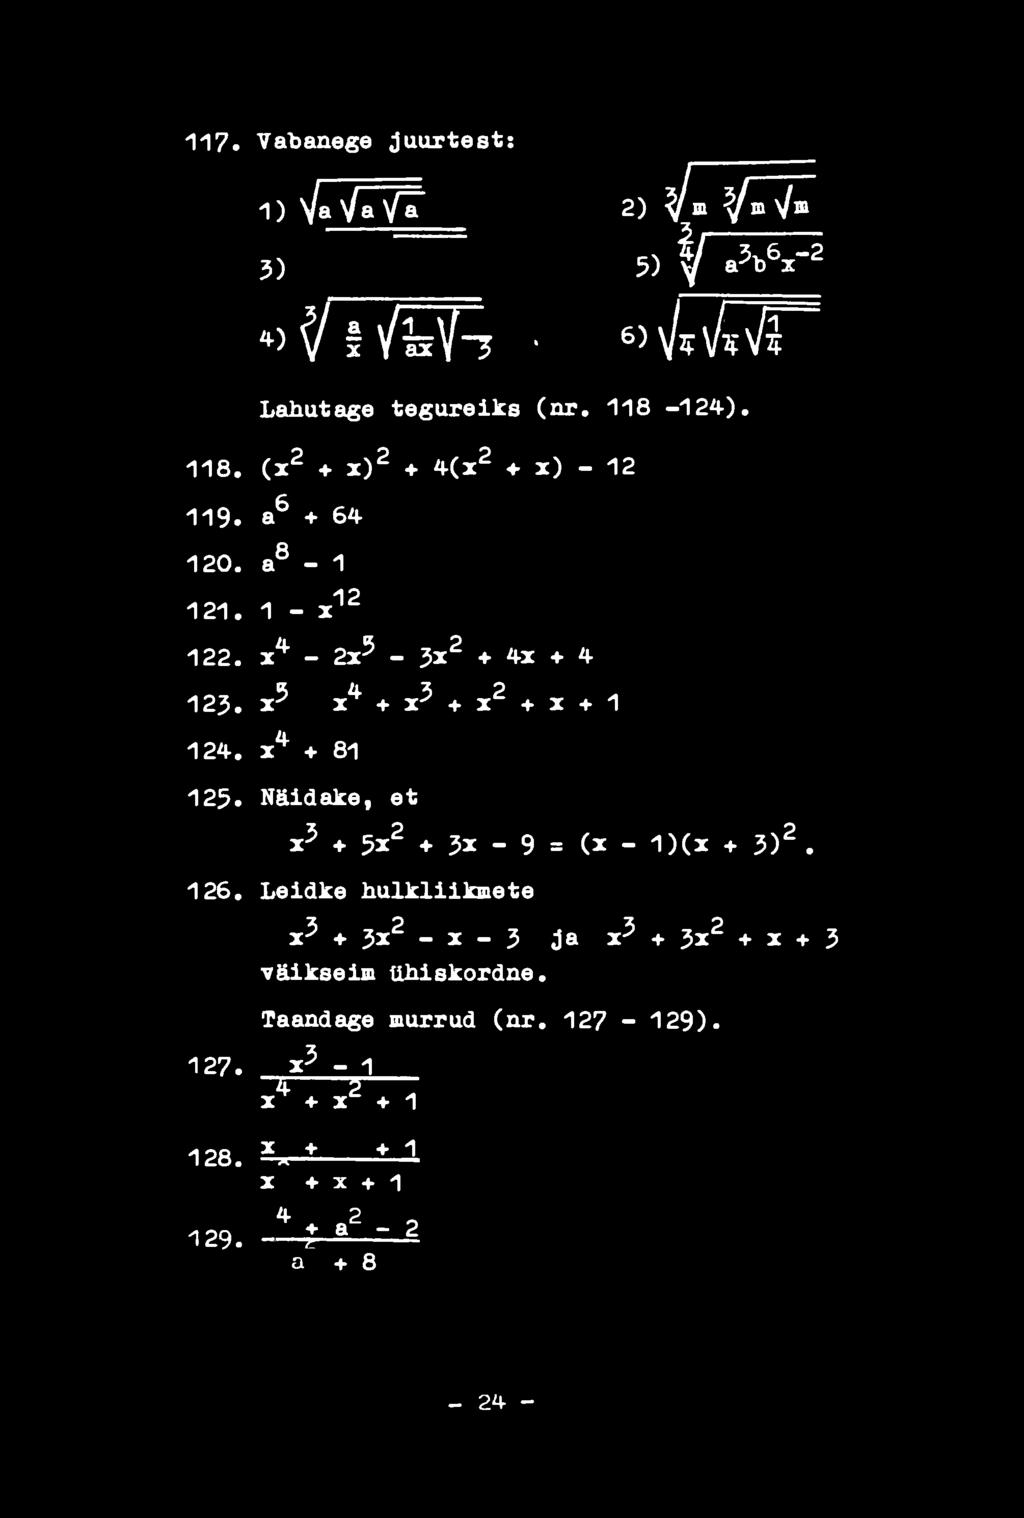 x^ x^ + x 3 + x 2 + x + 1 124. x 4 " * 81 125. Näidake, et x 5 5x 2 3x - 9 = (x - 1)(x + 3) 2. 126.